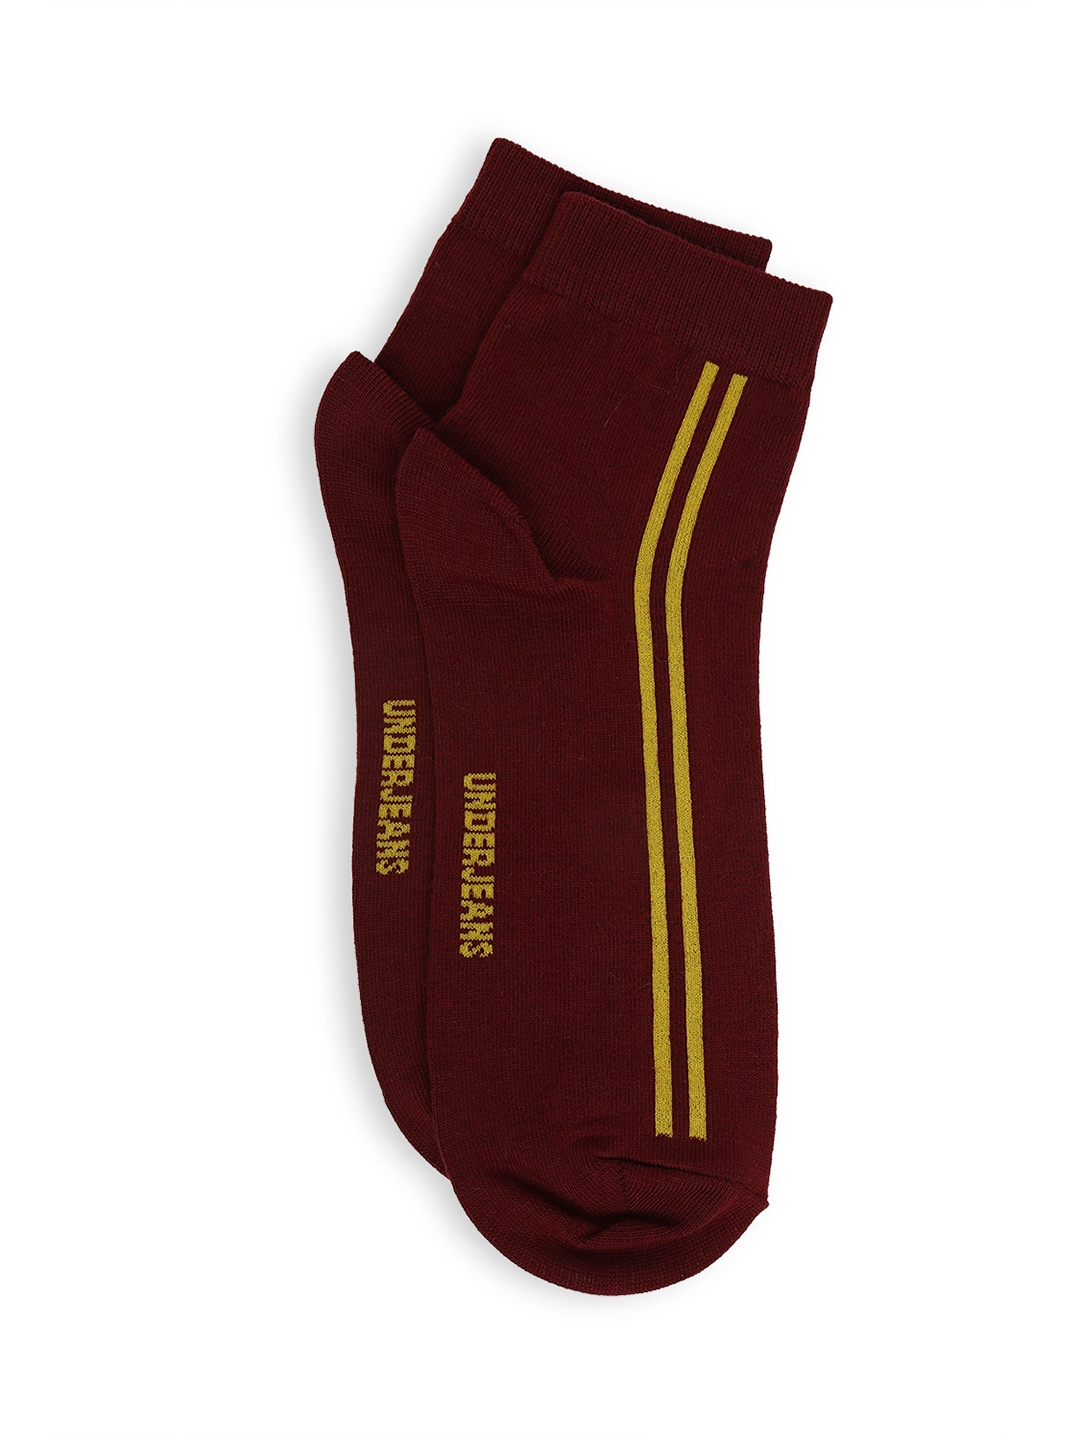 spykar | Underjeans by Spykar Premium Maroon & Anthra Melange Ankle Length Socks - Pack Of 2 7